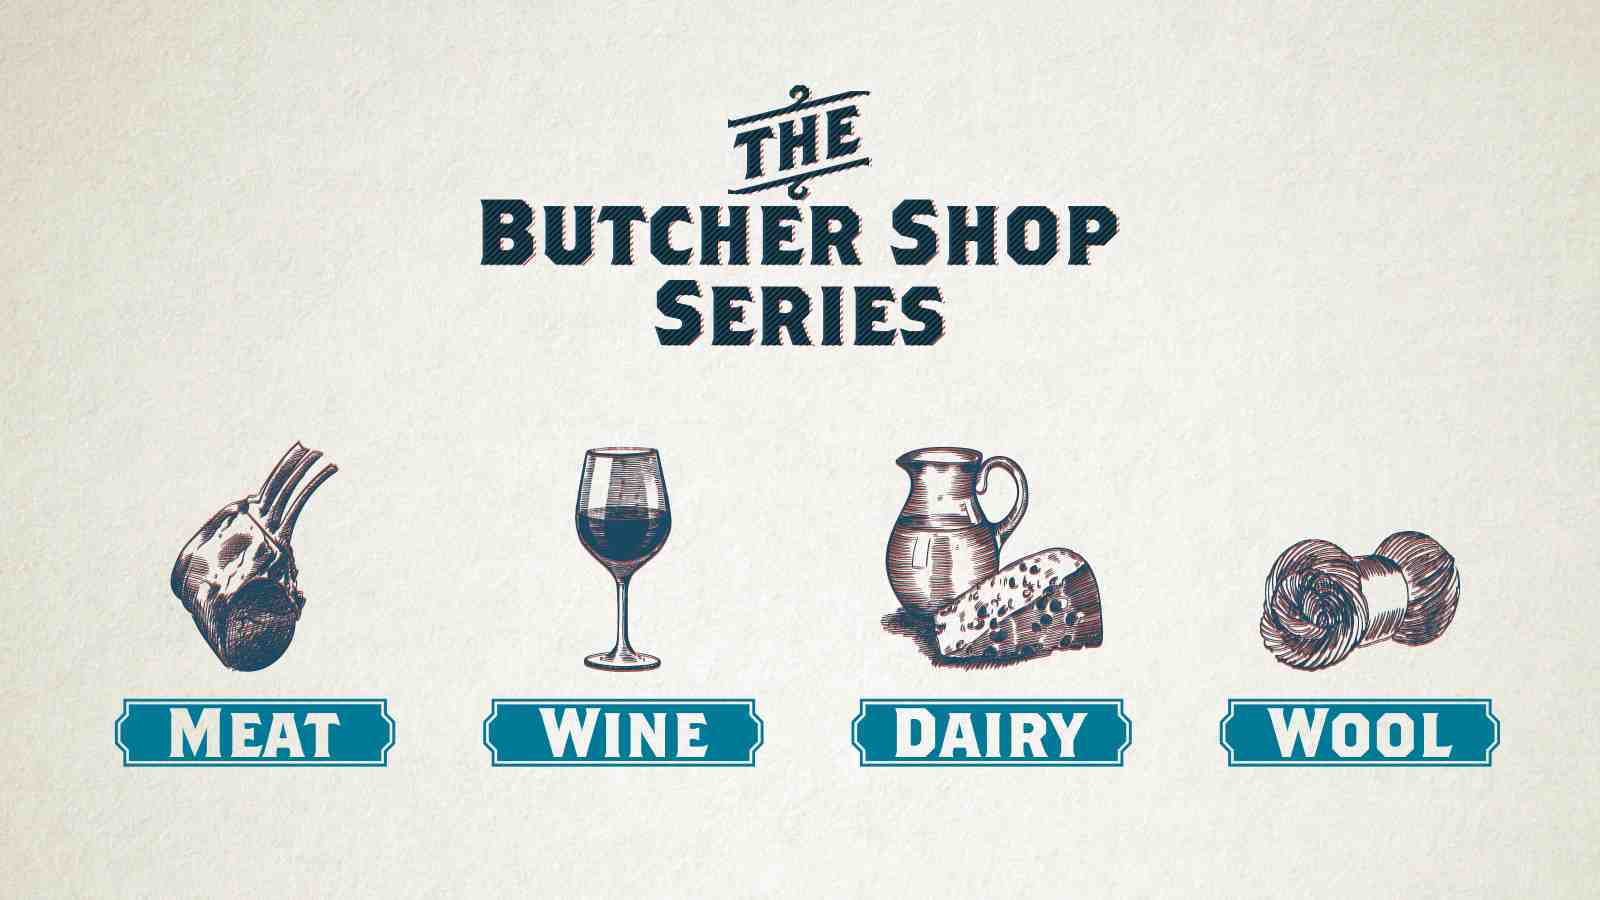 Butchershop series logo depicting meat, wine, dairy and wool 